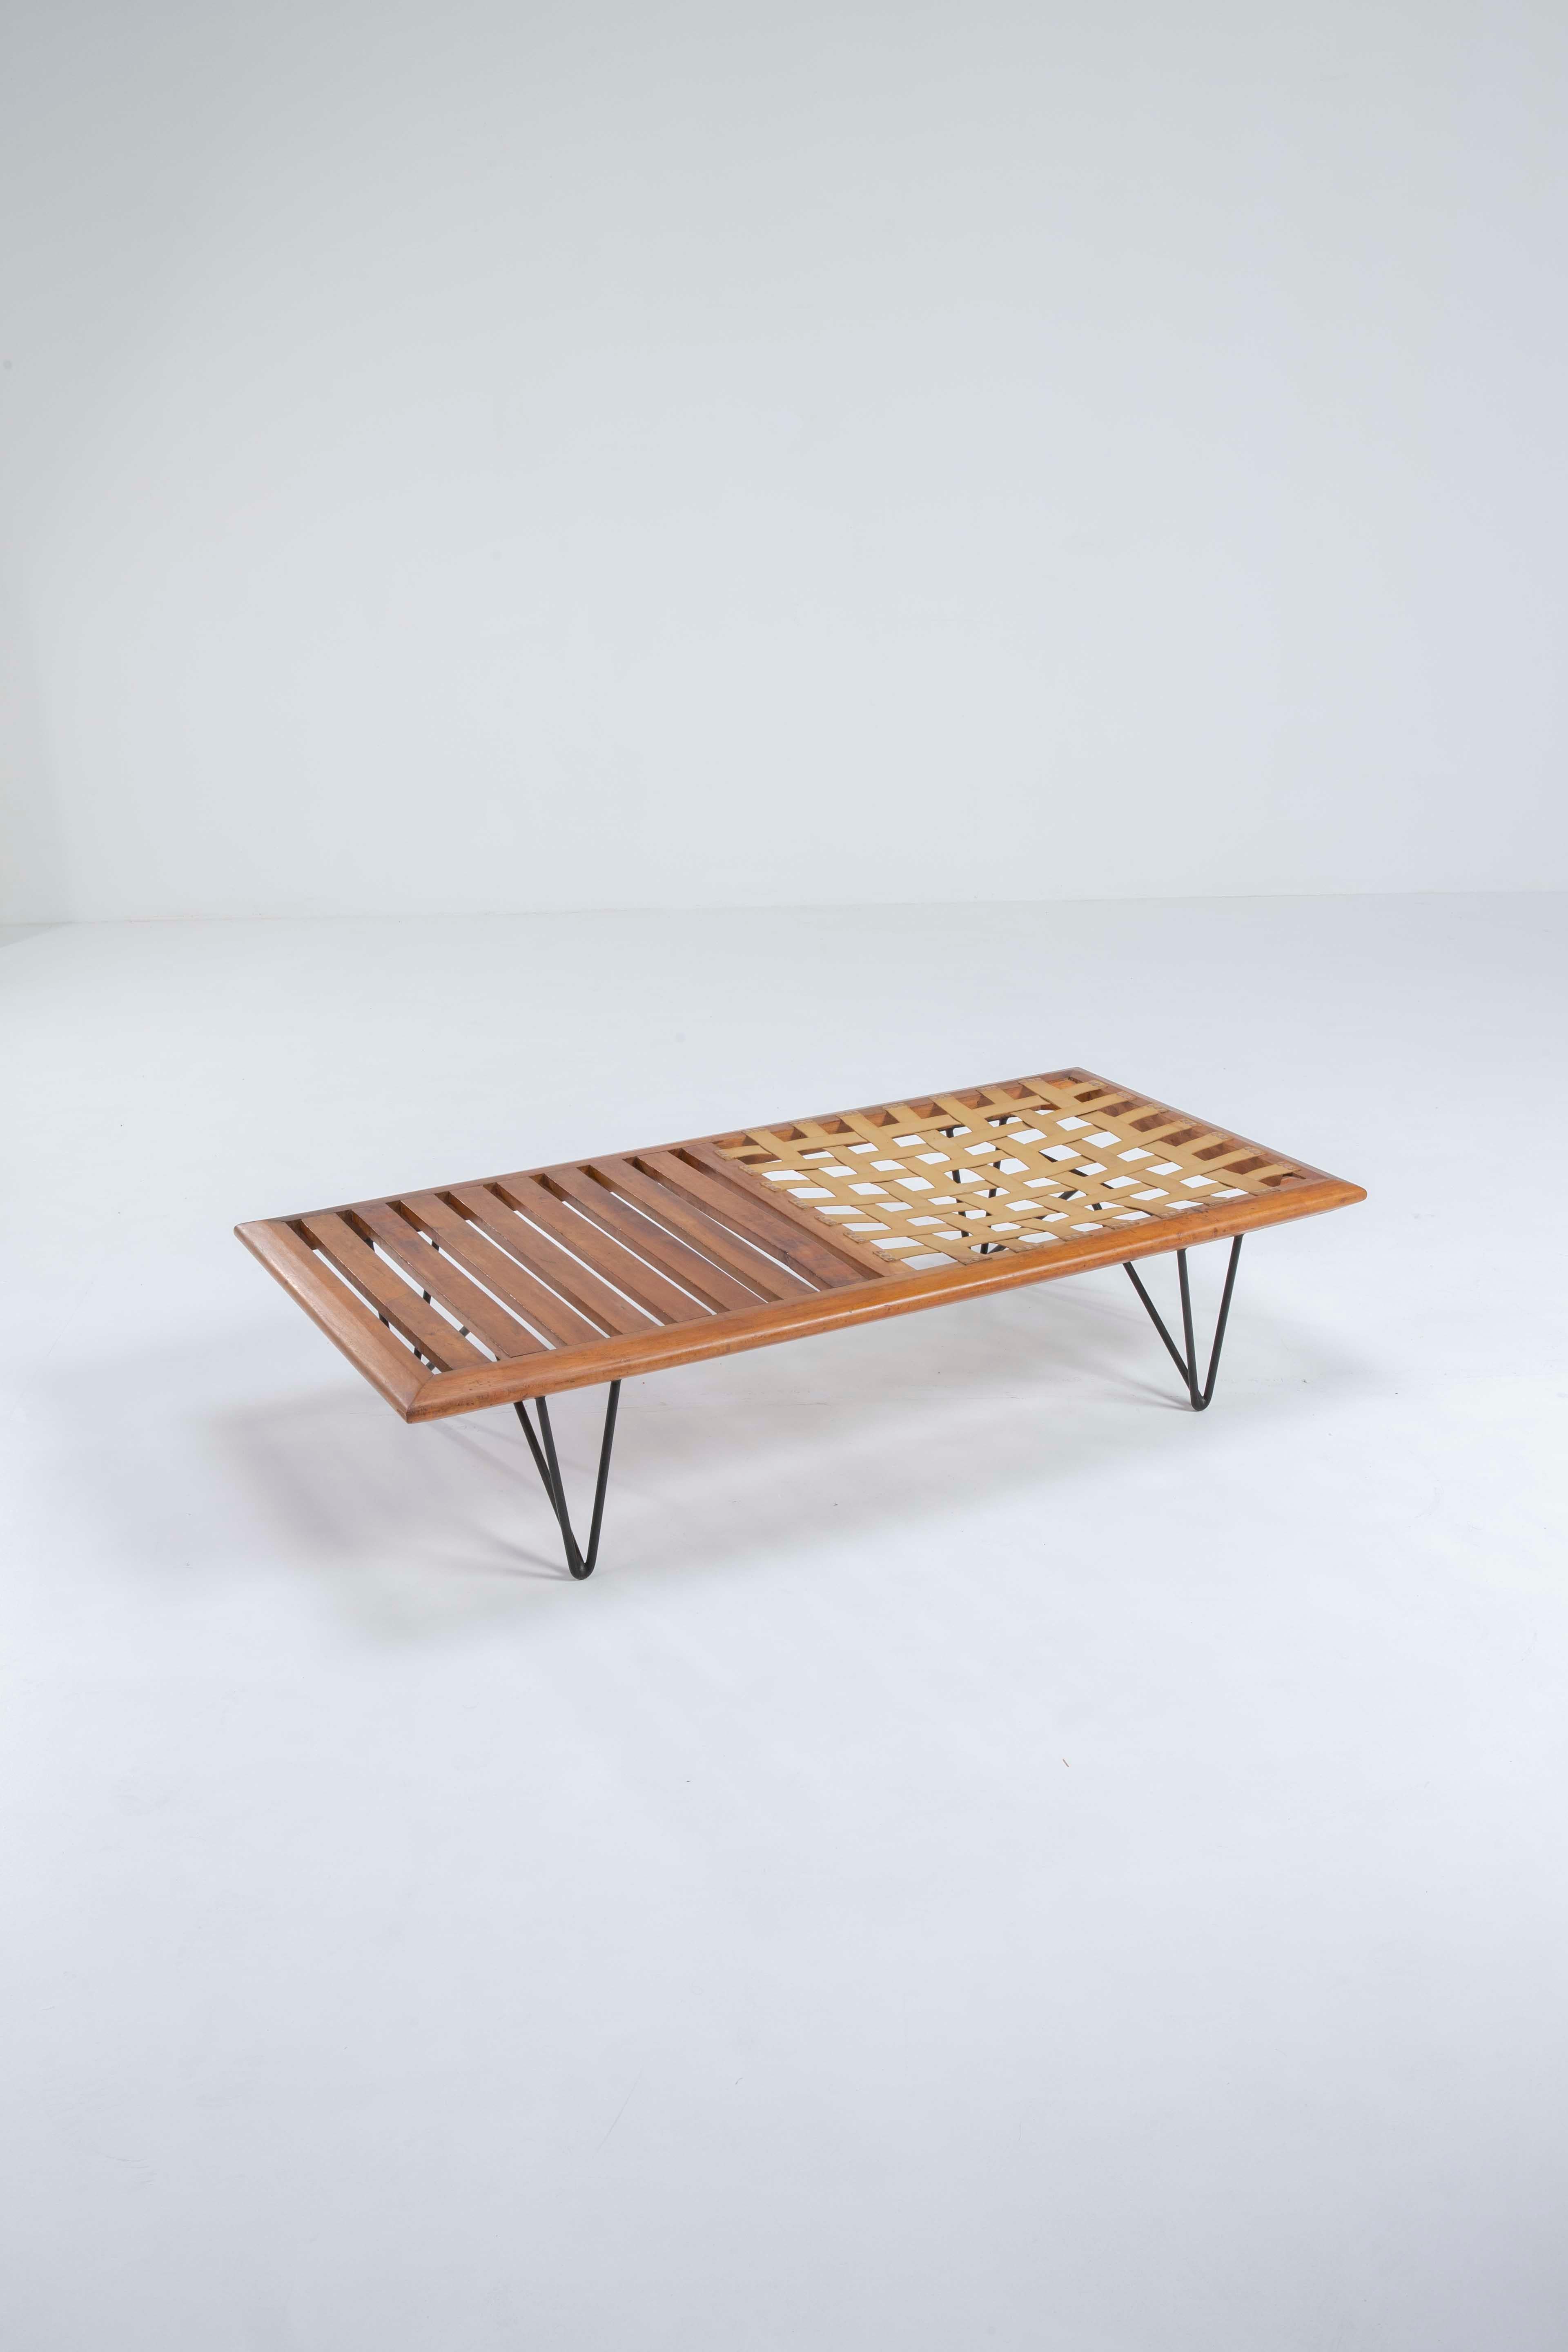 Carlo Hauner and Martin Eisler Rare bench - 1950s Italian Scandinavian Design For Sale 3